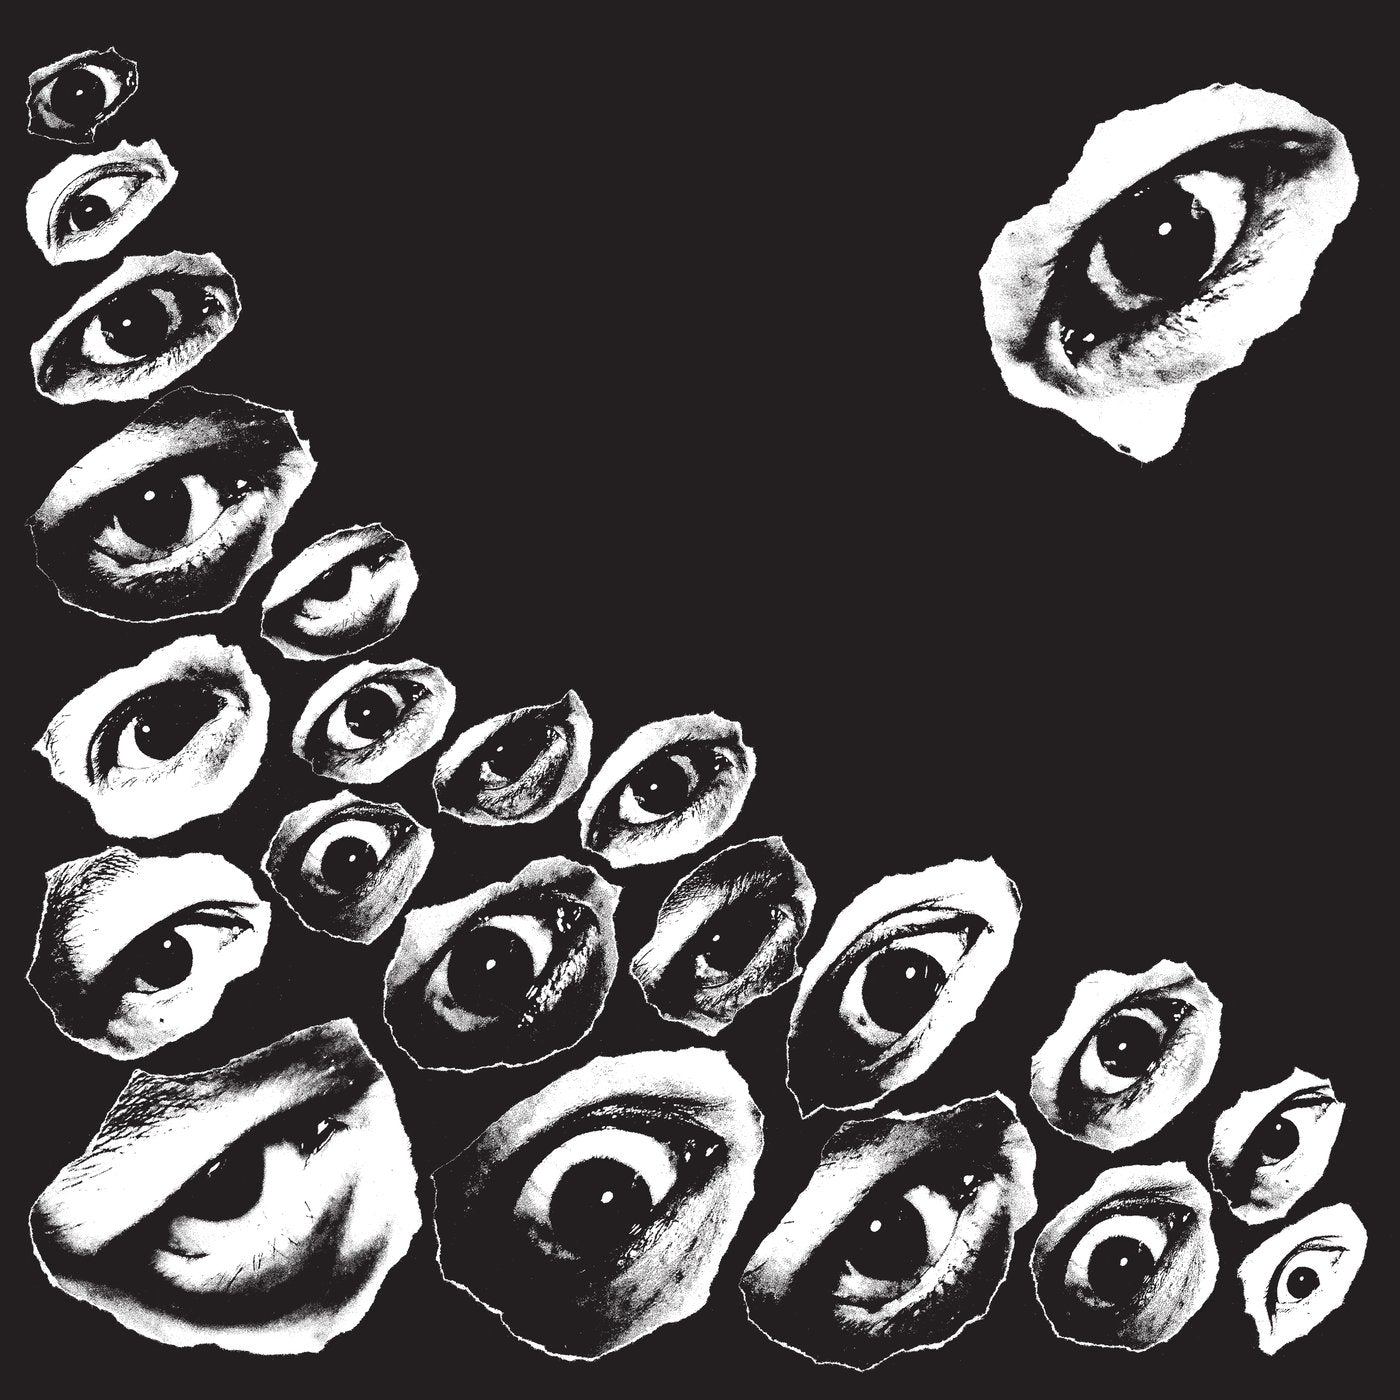 Crow - "Eye" LP